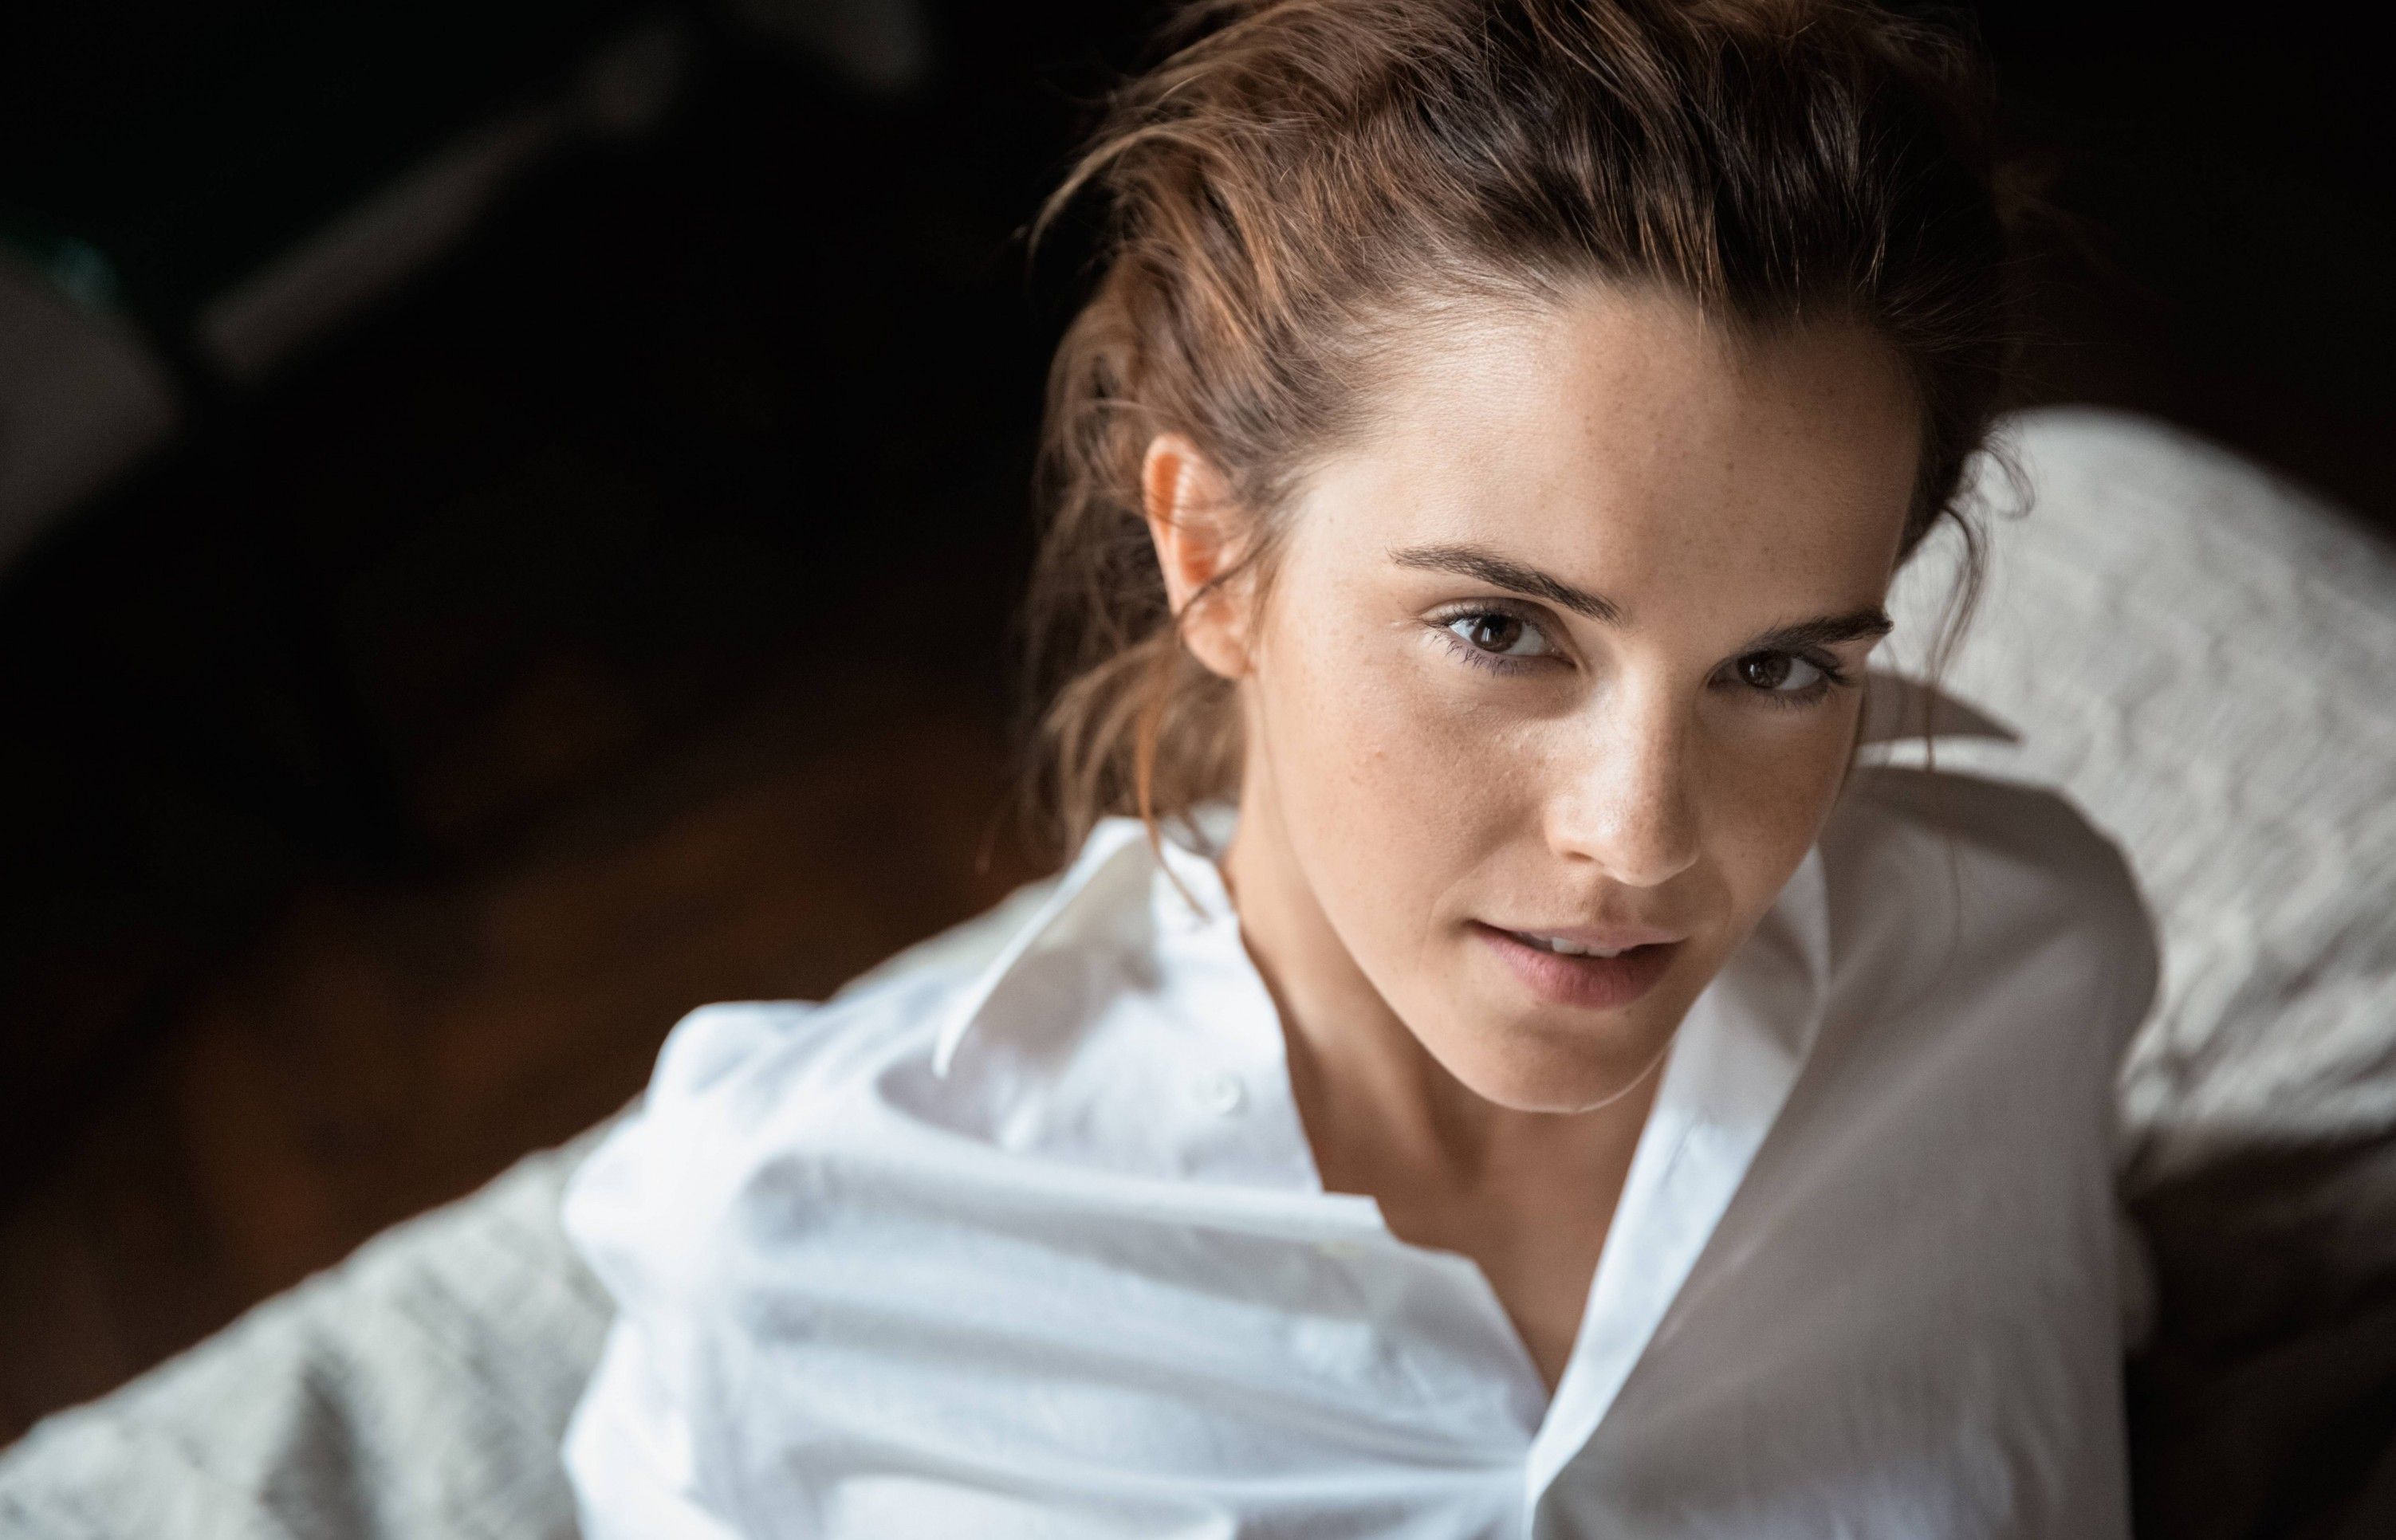 Download 3005x1932 Emma Watson, Actress, White Shirt, Celebrity Wallpaper